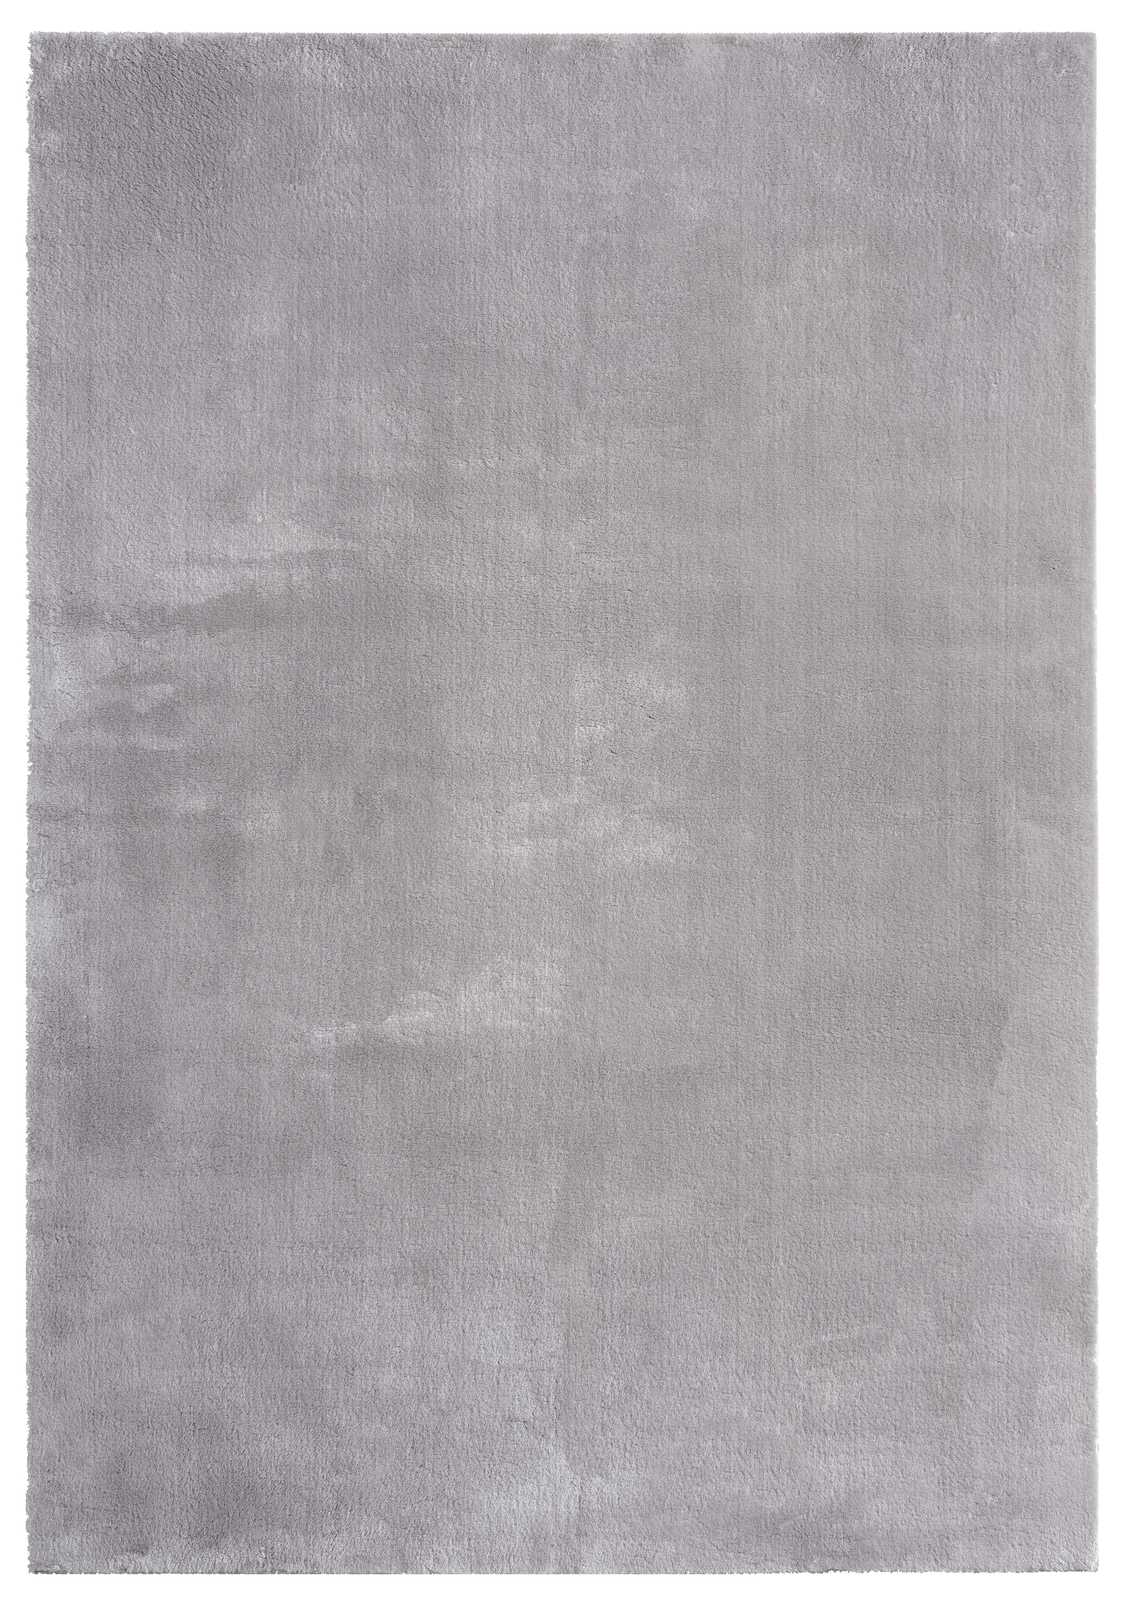             Fine high pile carpet in grey - 110 x 60 cm
        